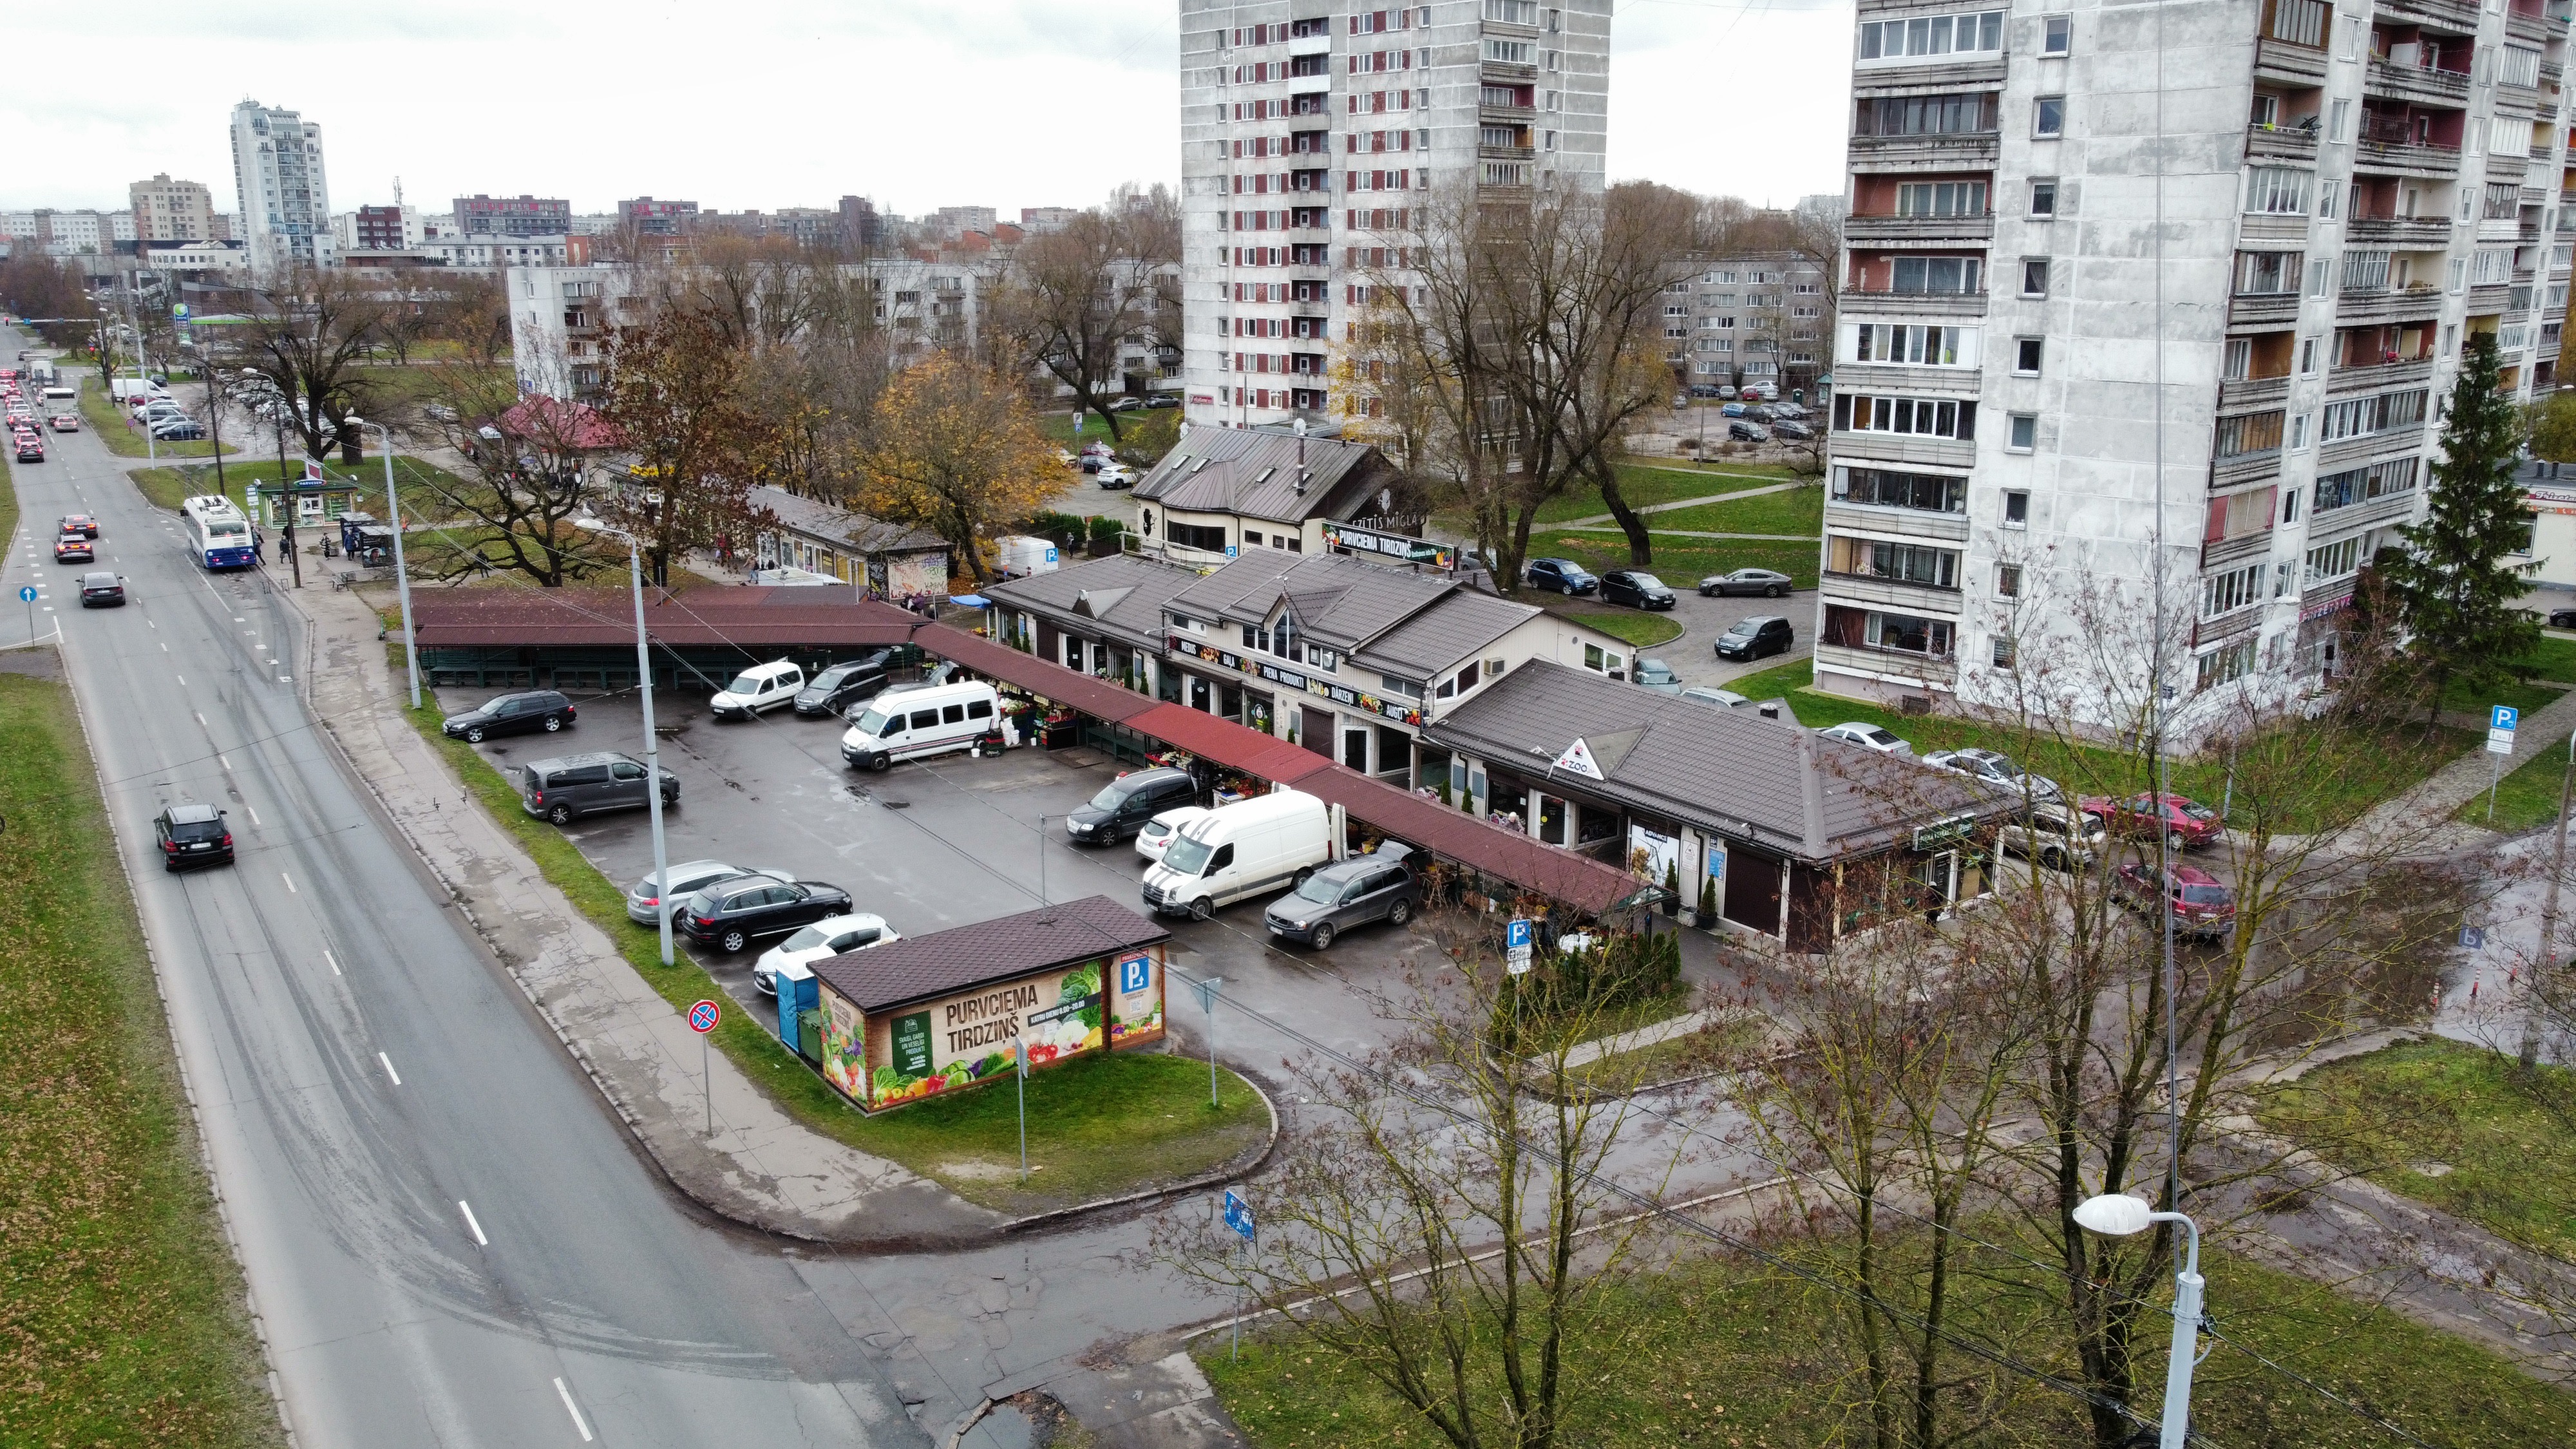 Investment property, Dzelzavas street - Image 1